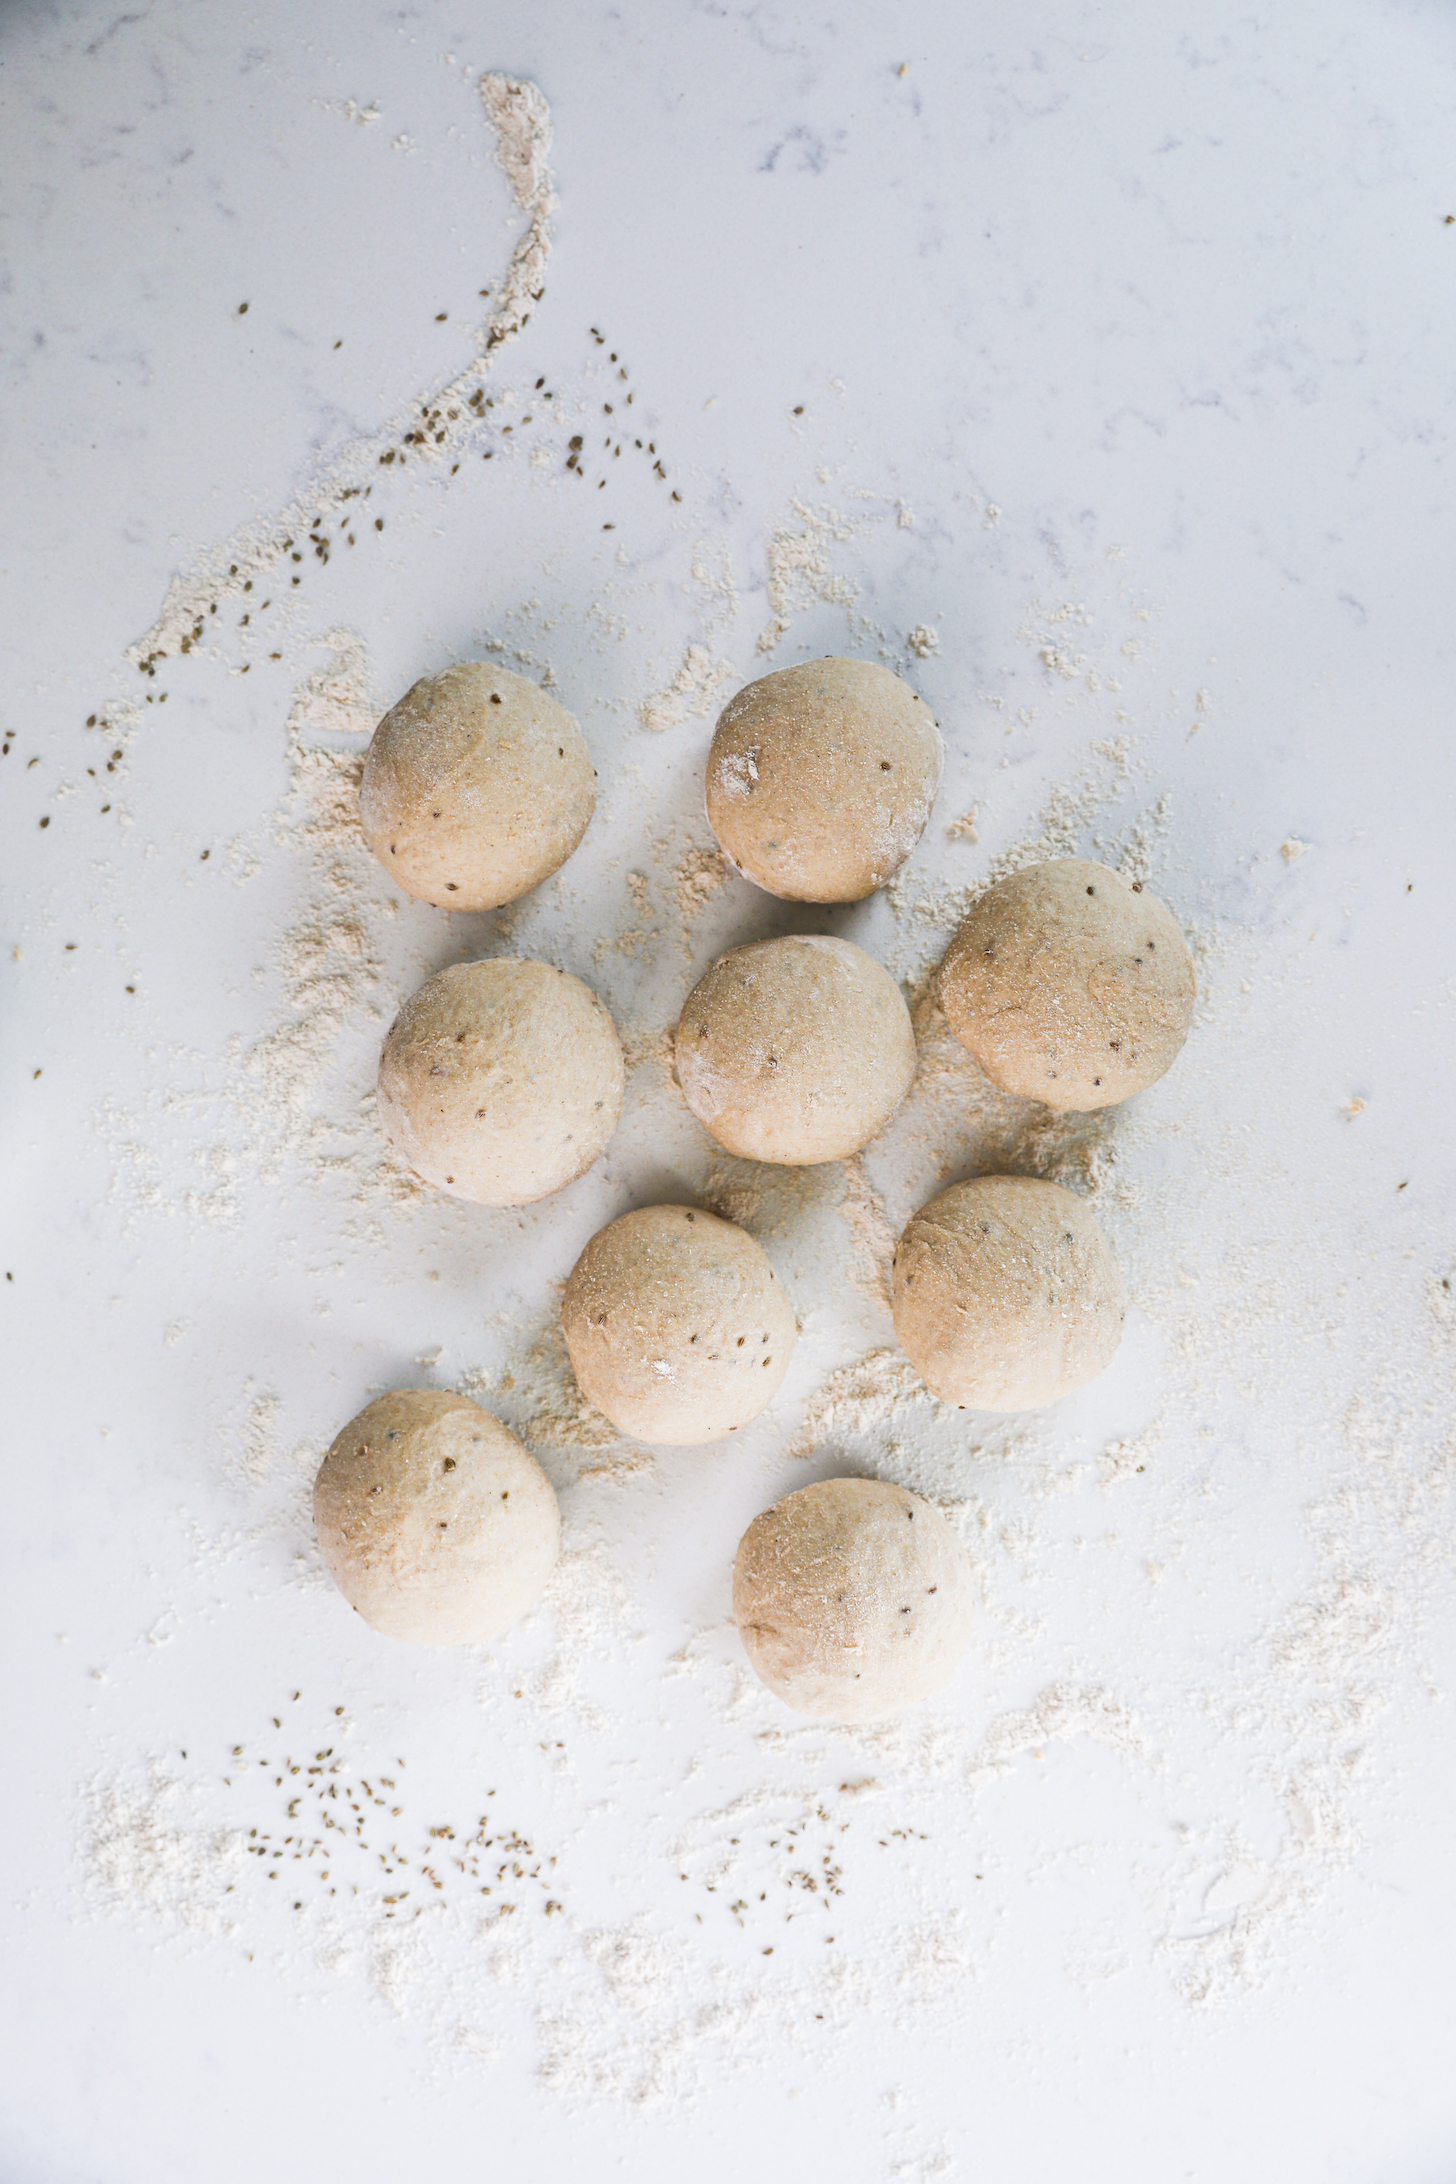 Eight balls of flour on a flour-dusted surface.